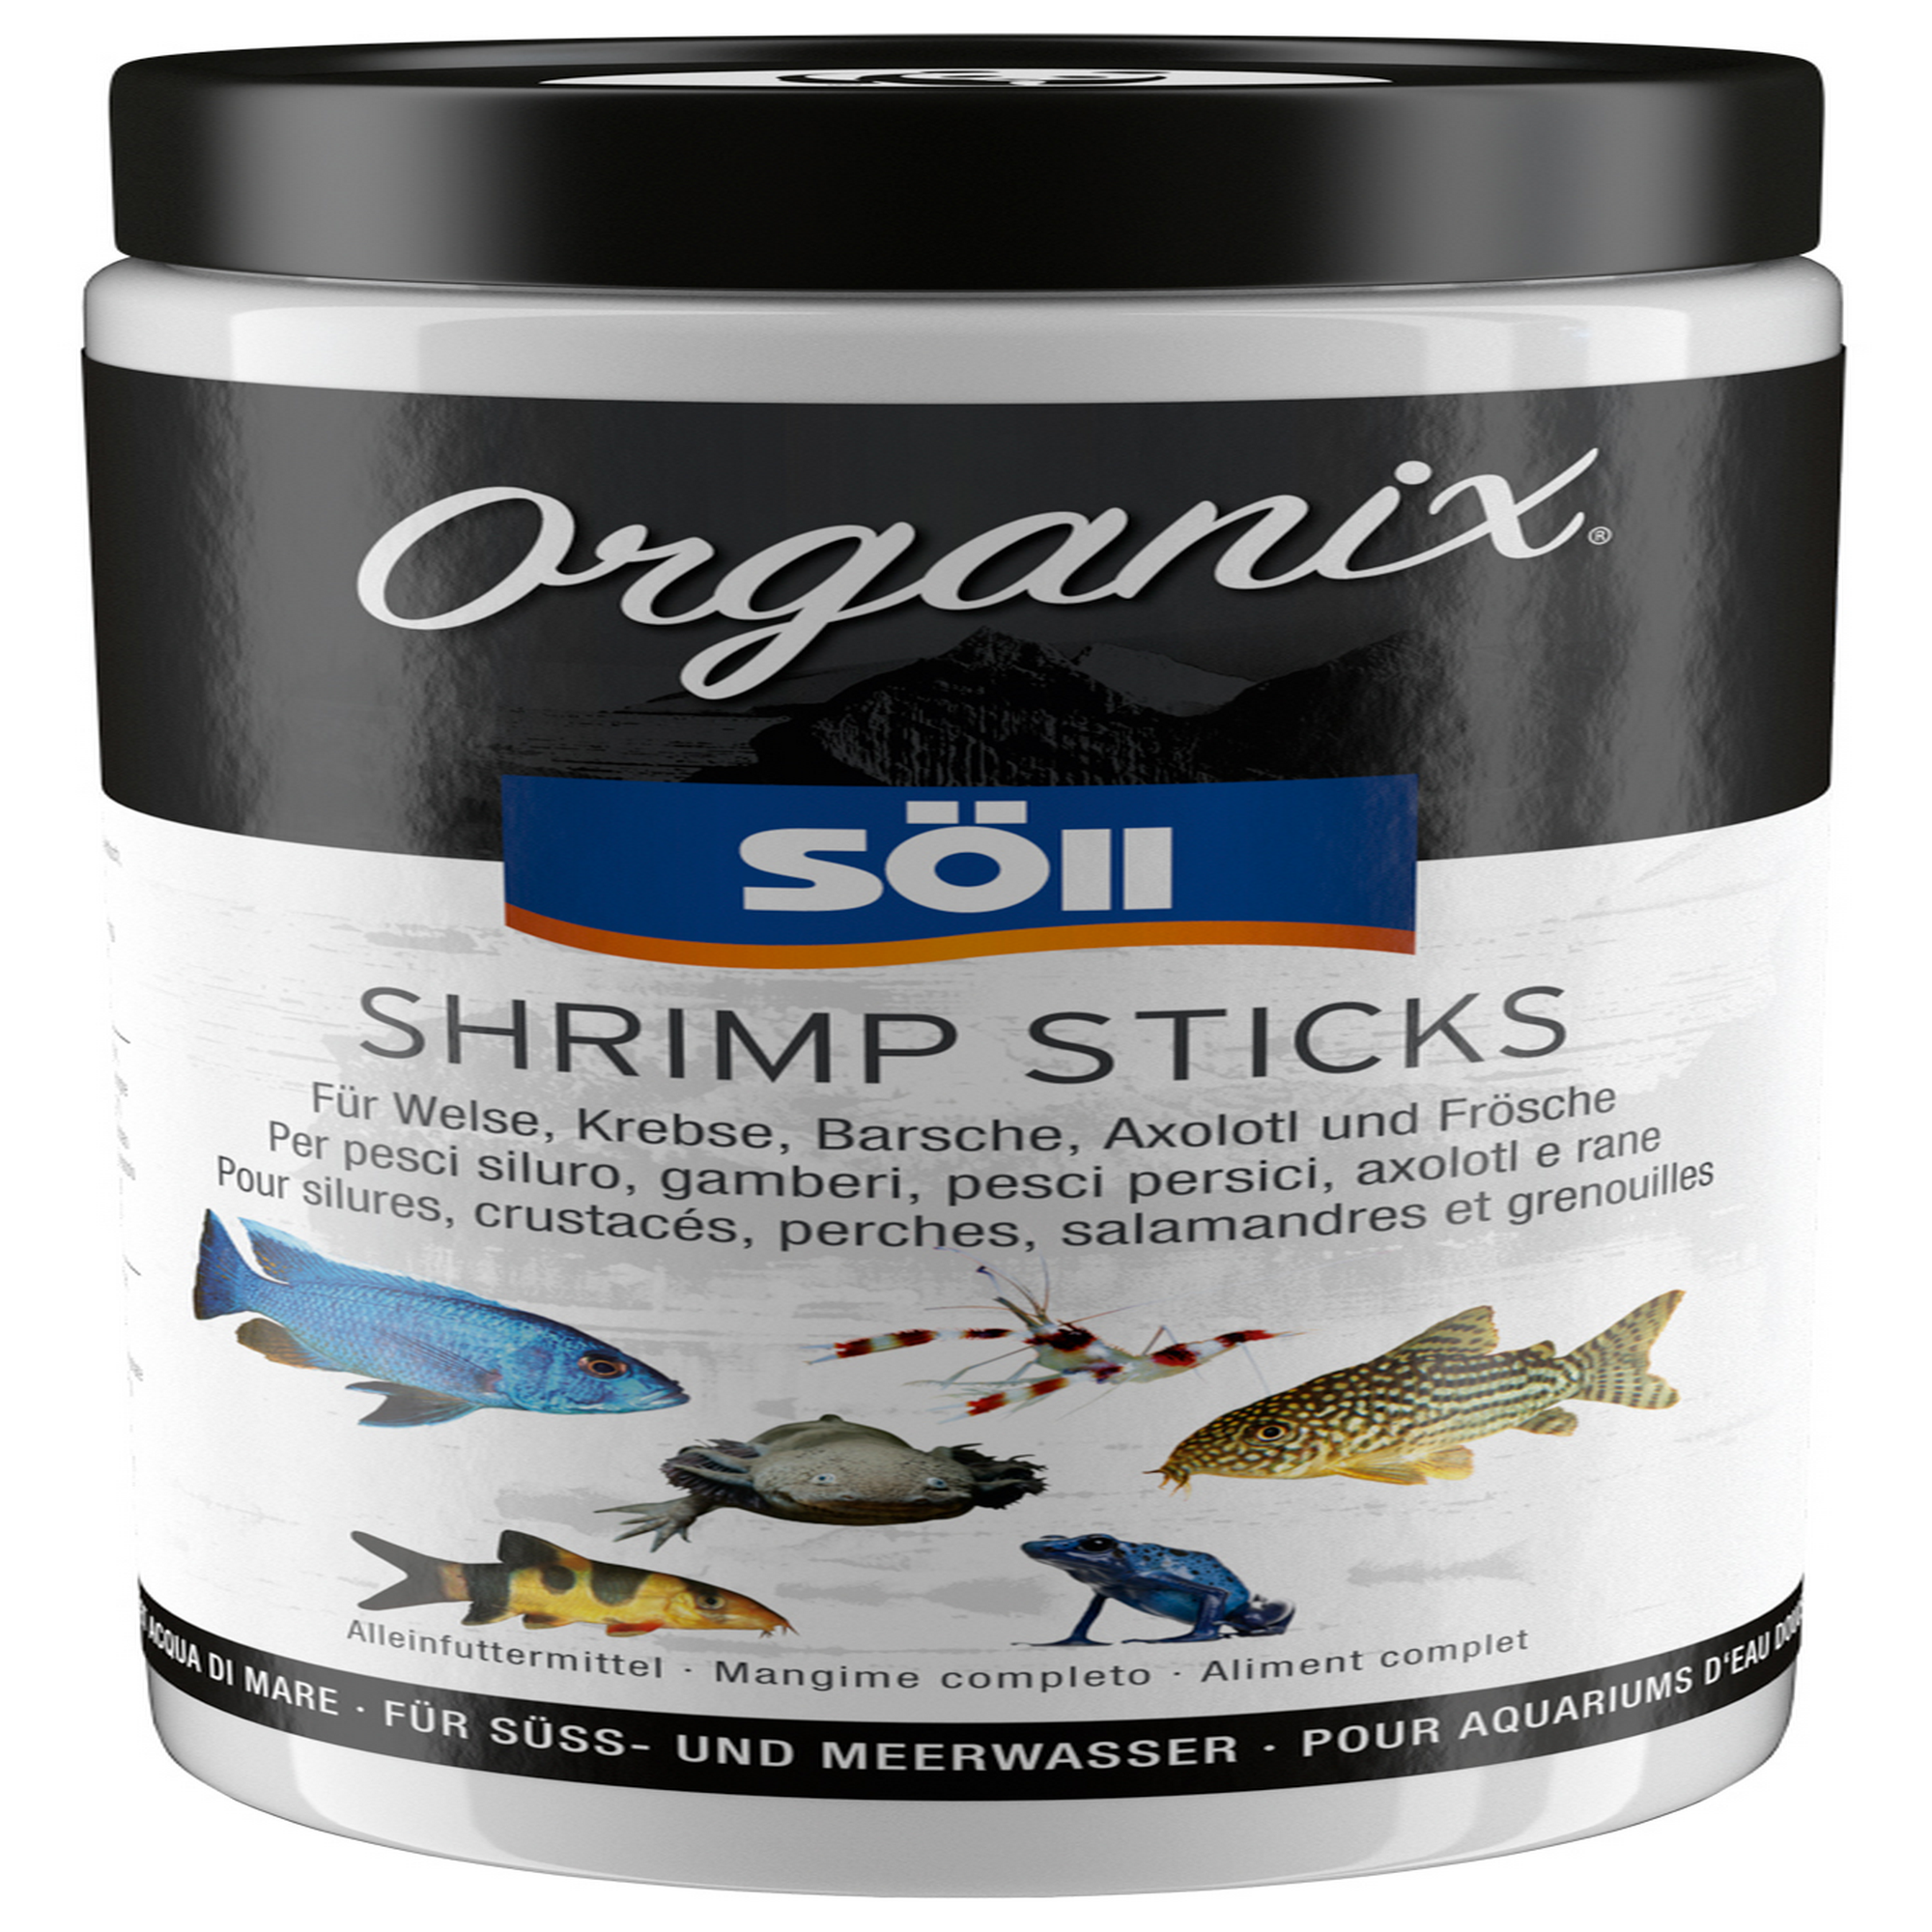 Organix Shrimp Sticks 1 l + product picture